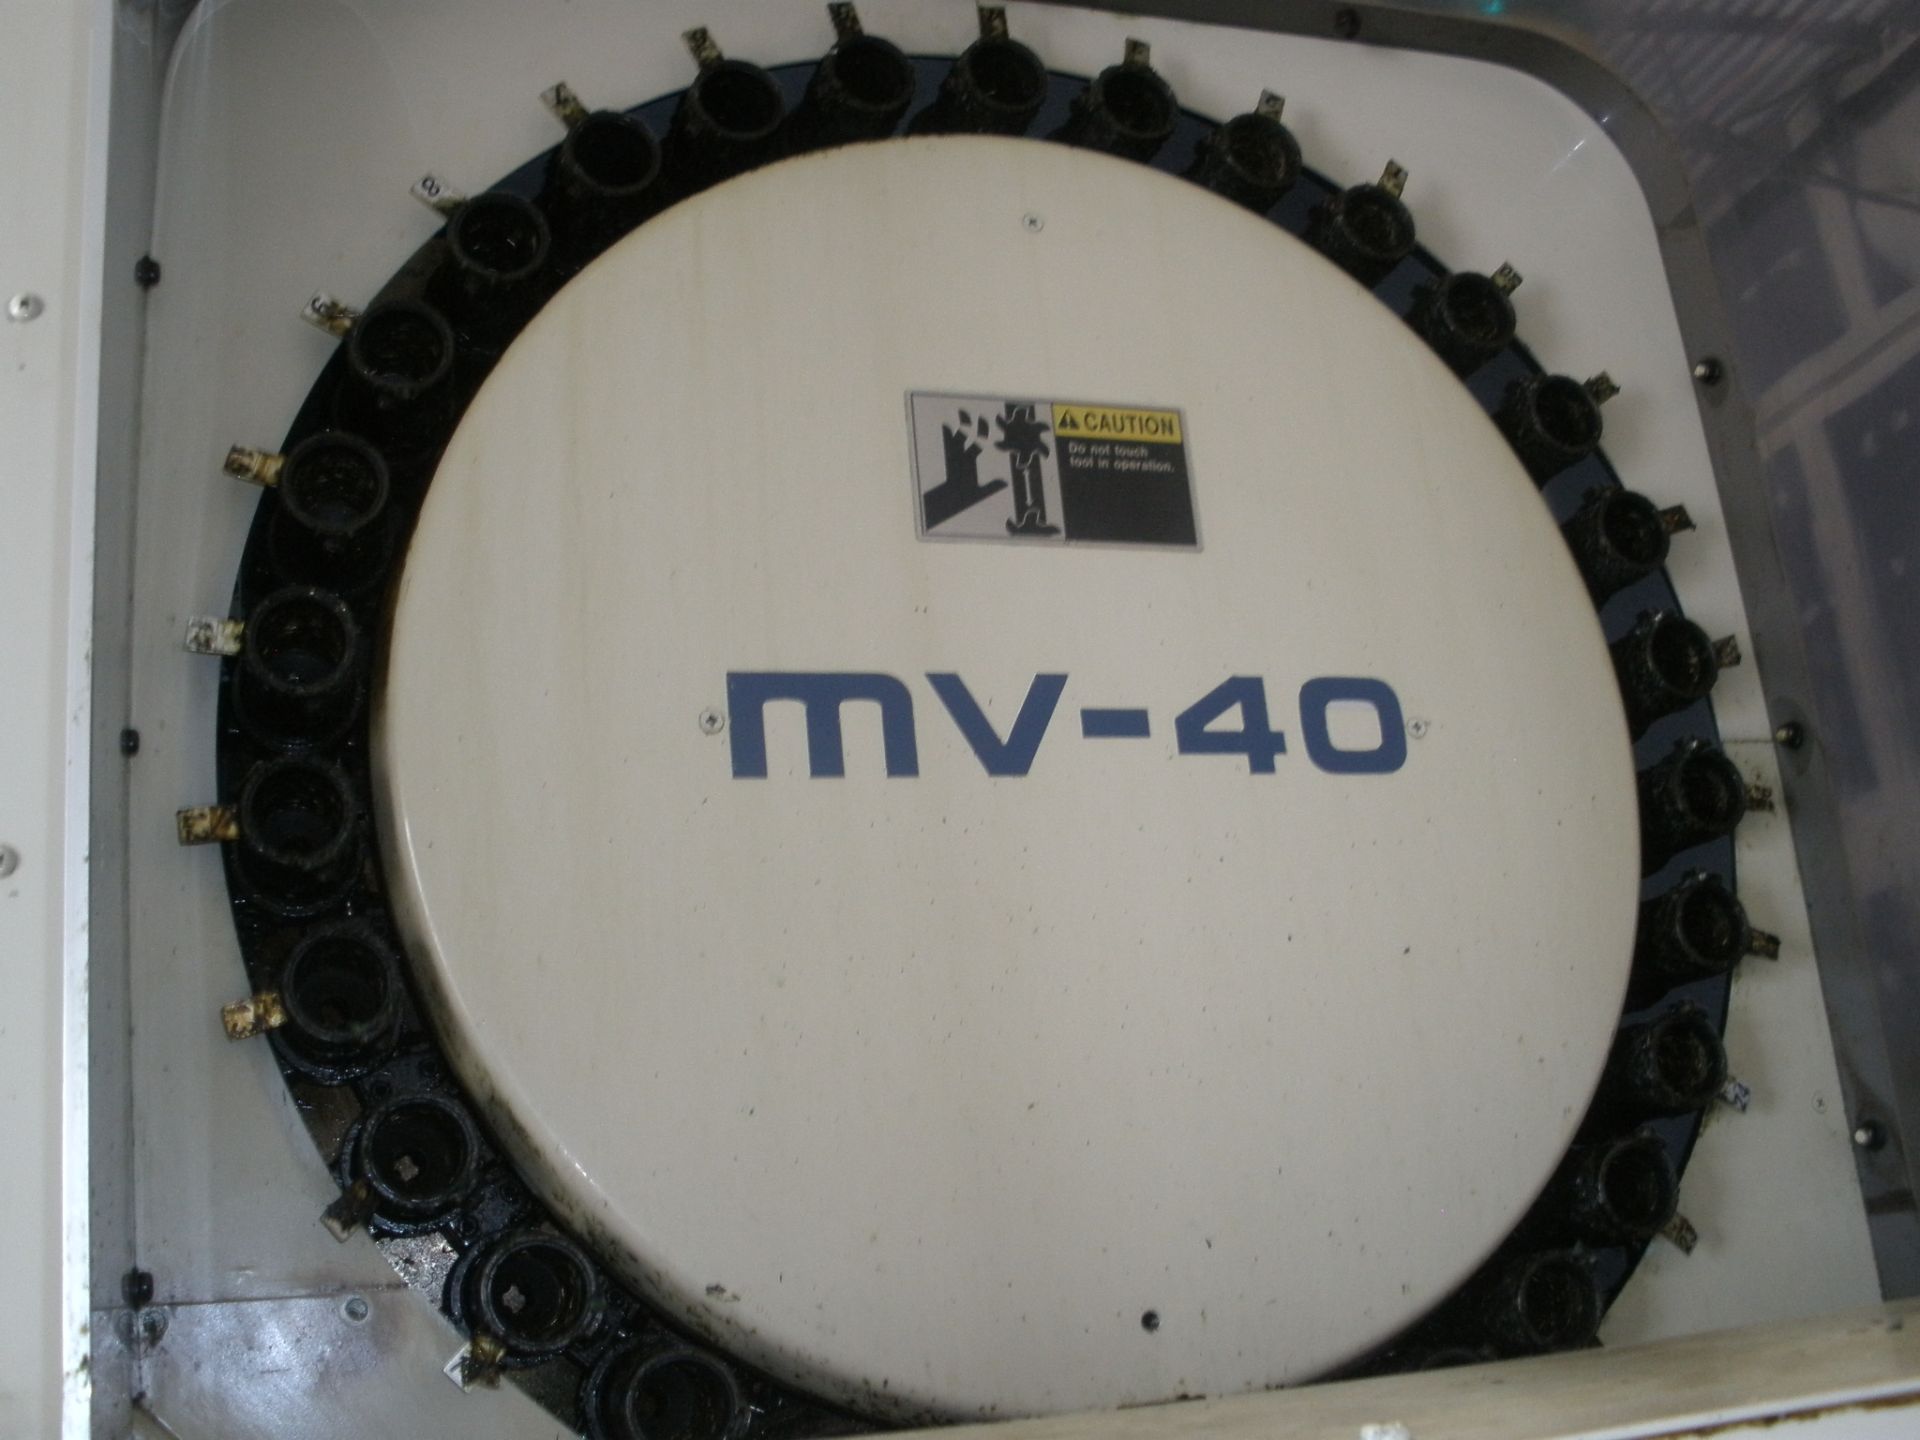 Mori Seiki MV-40B CNC Mill Fanuc OMC Control,Chip Conveyor ,Pallet Changer W/ Video - Image 11 of 16